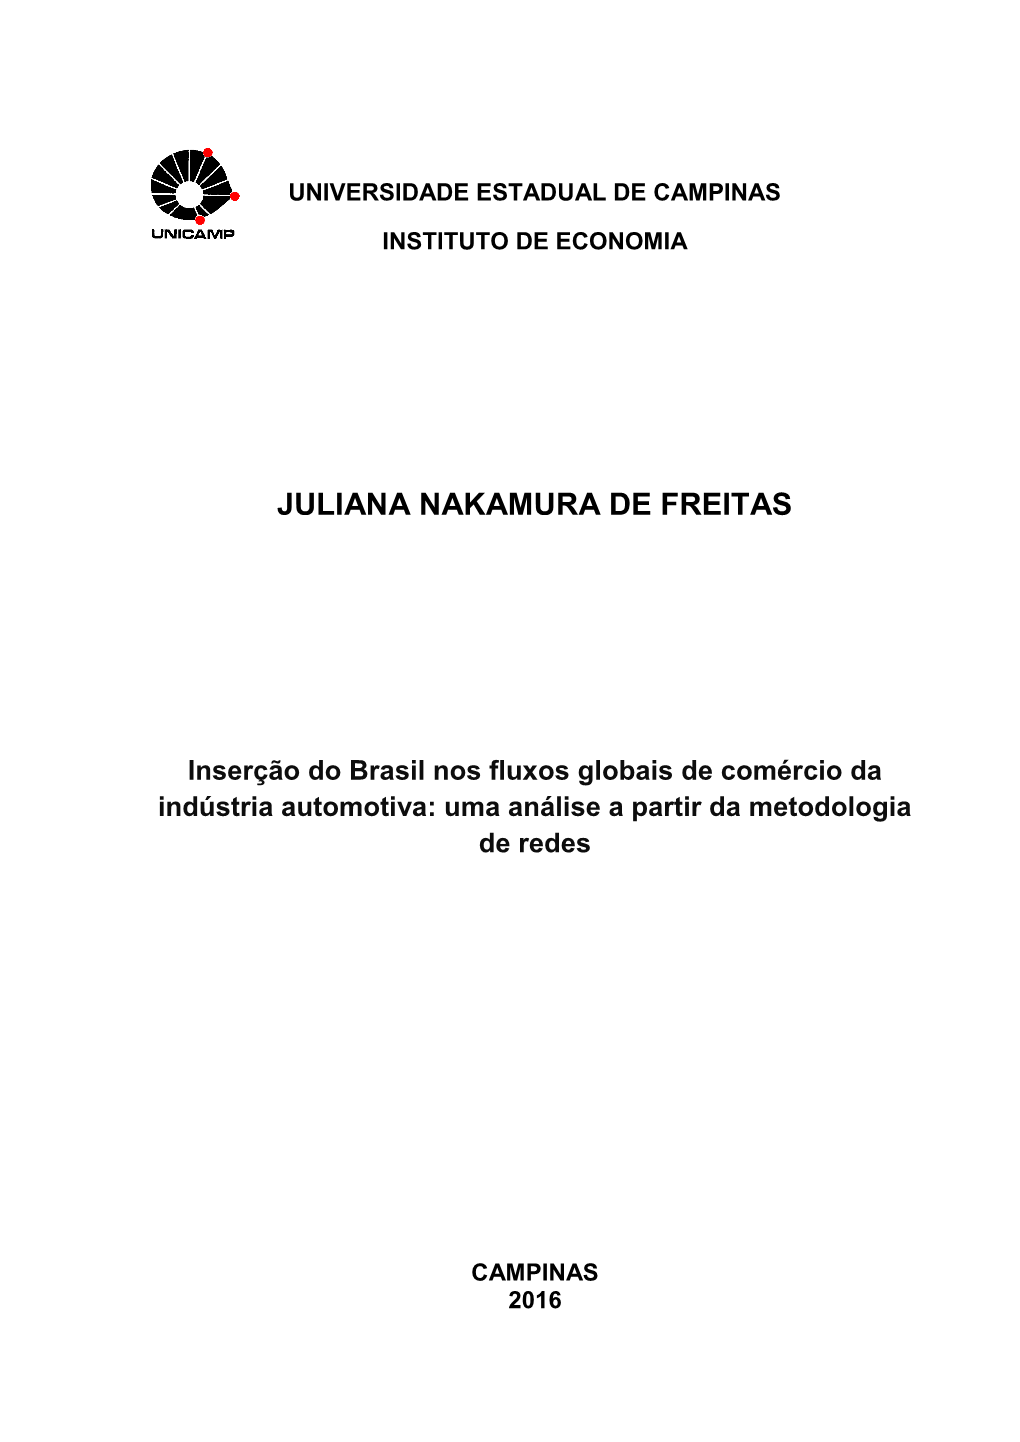 Juliana Nakamura De Freitas